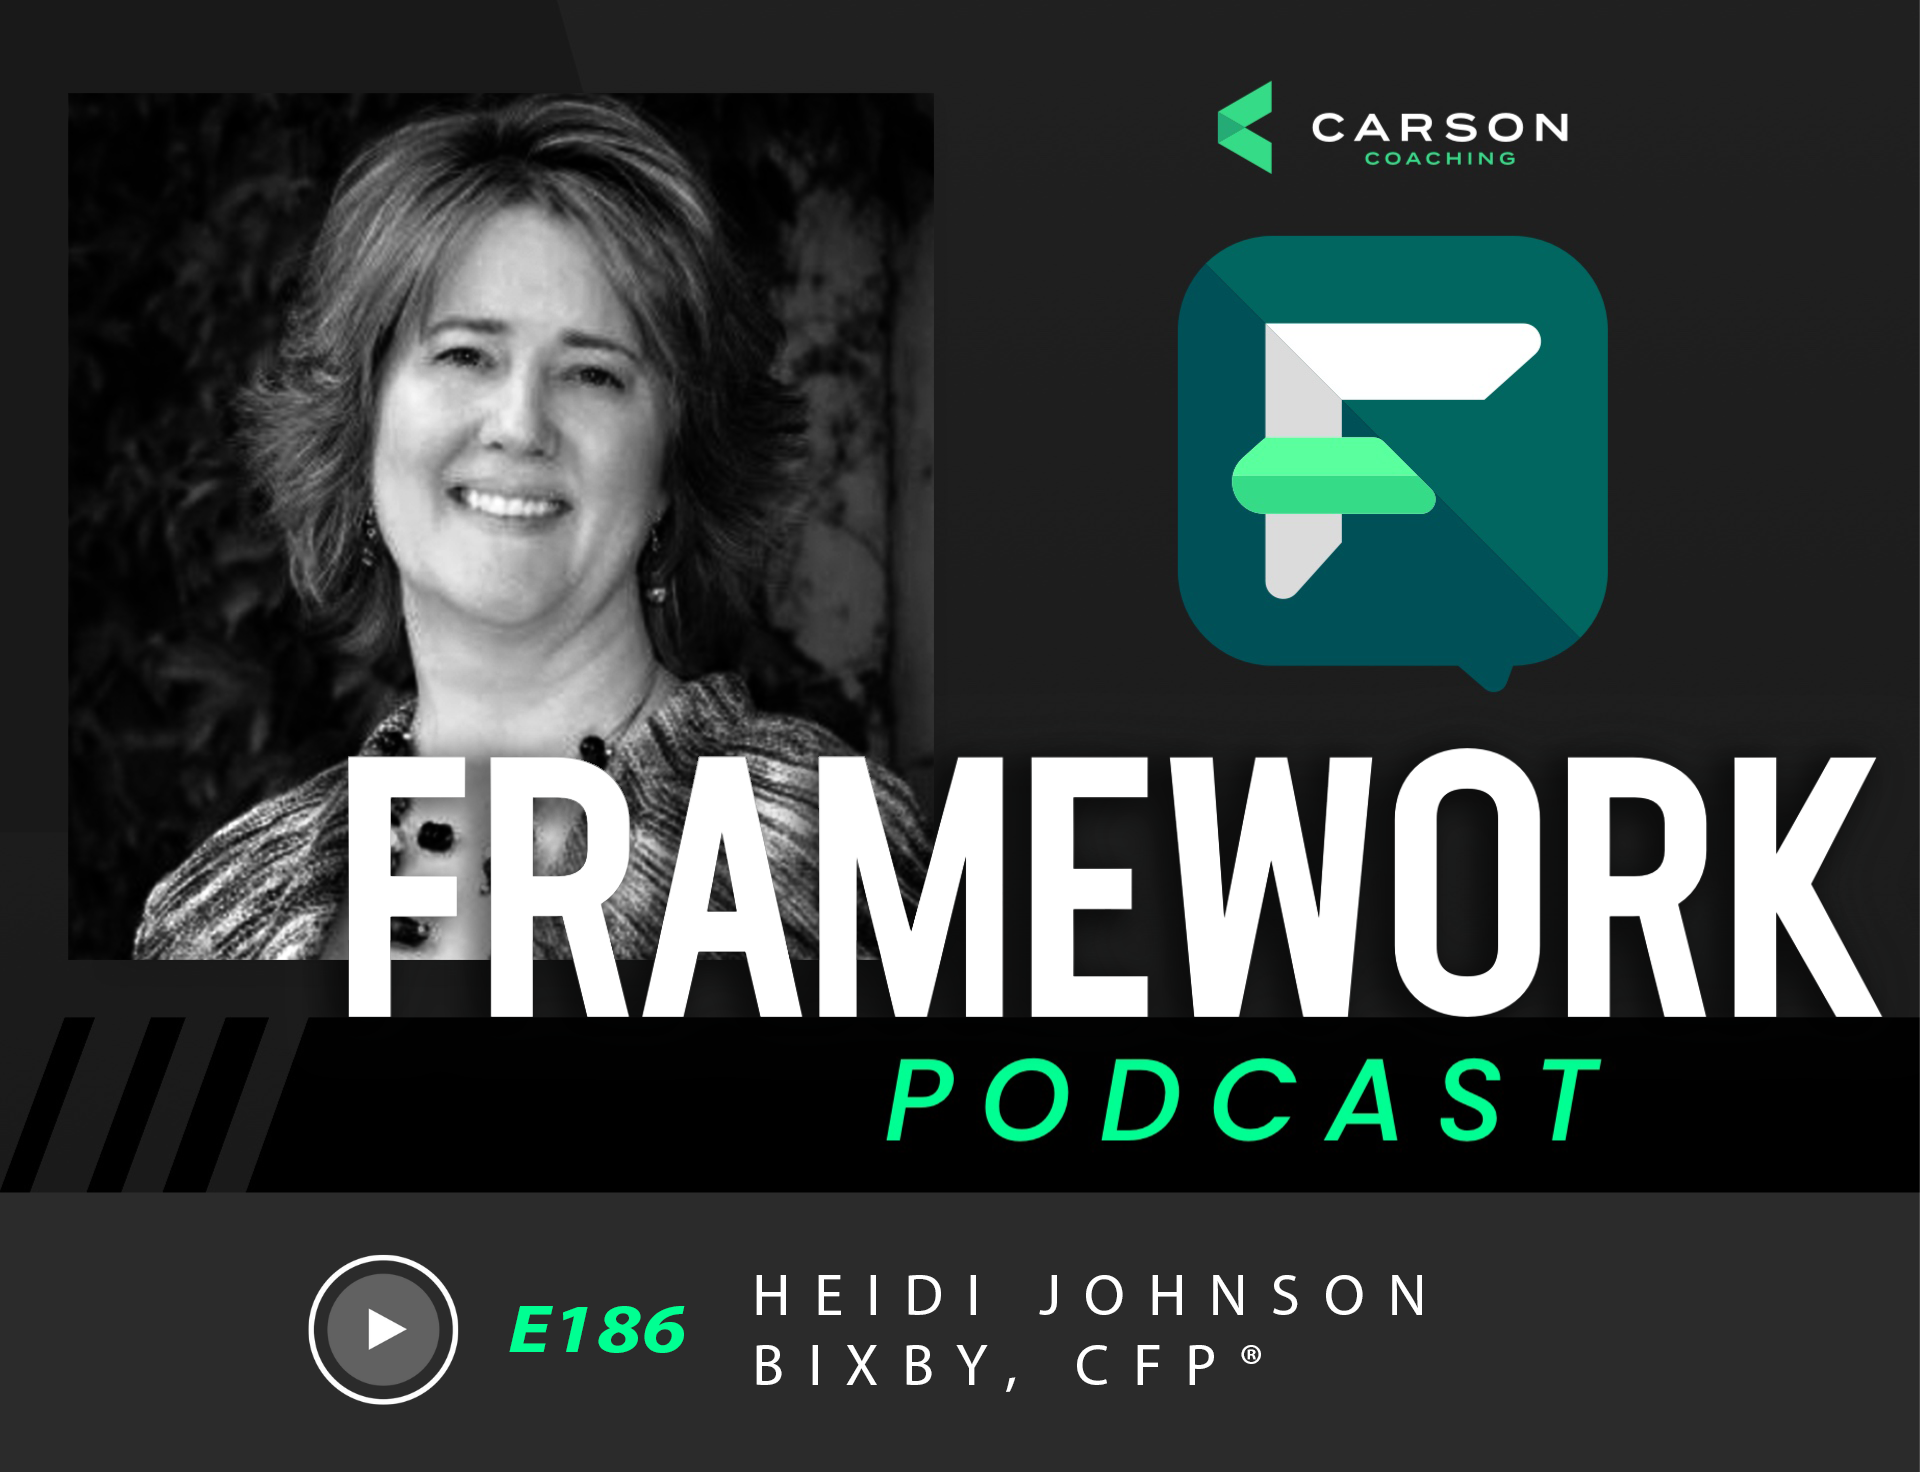 Heidi Johnson Bixby: Finding Success Through Financial Planning and Teamwork